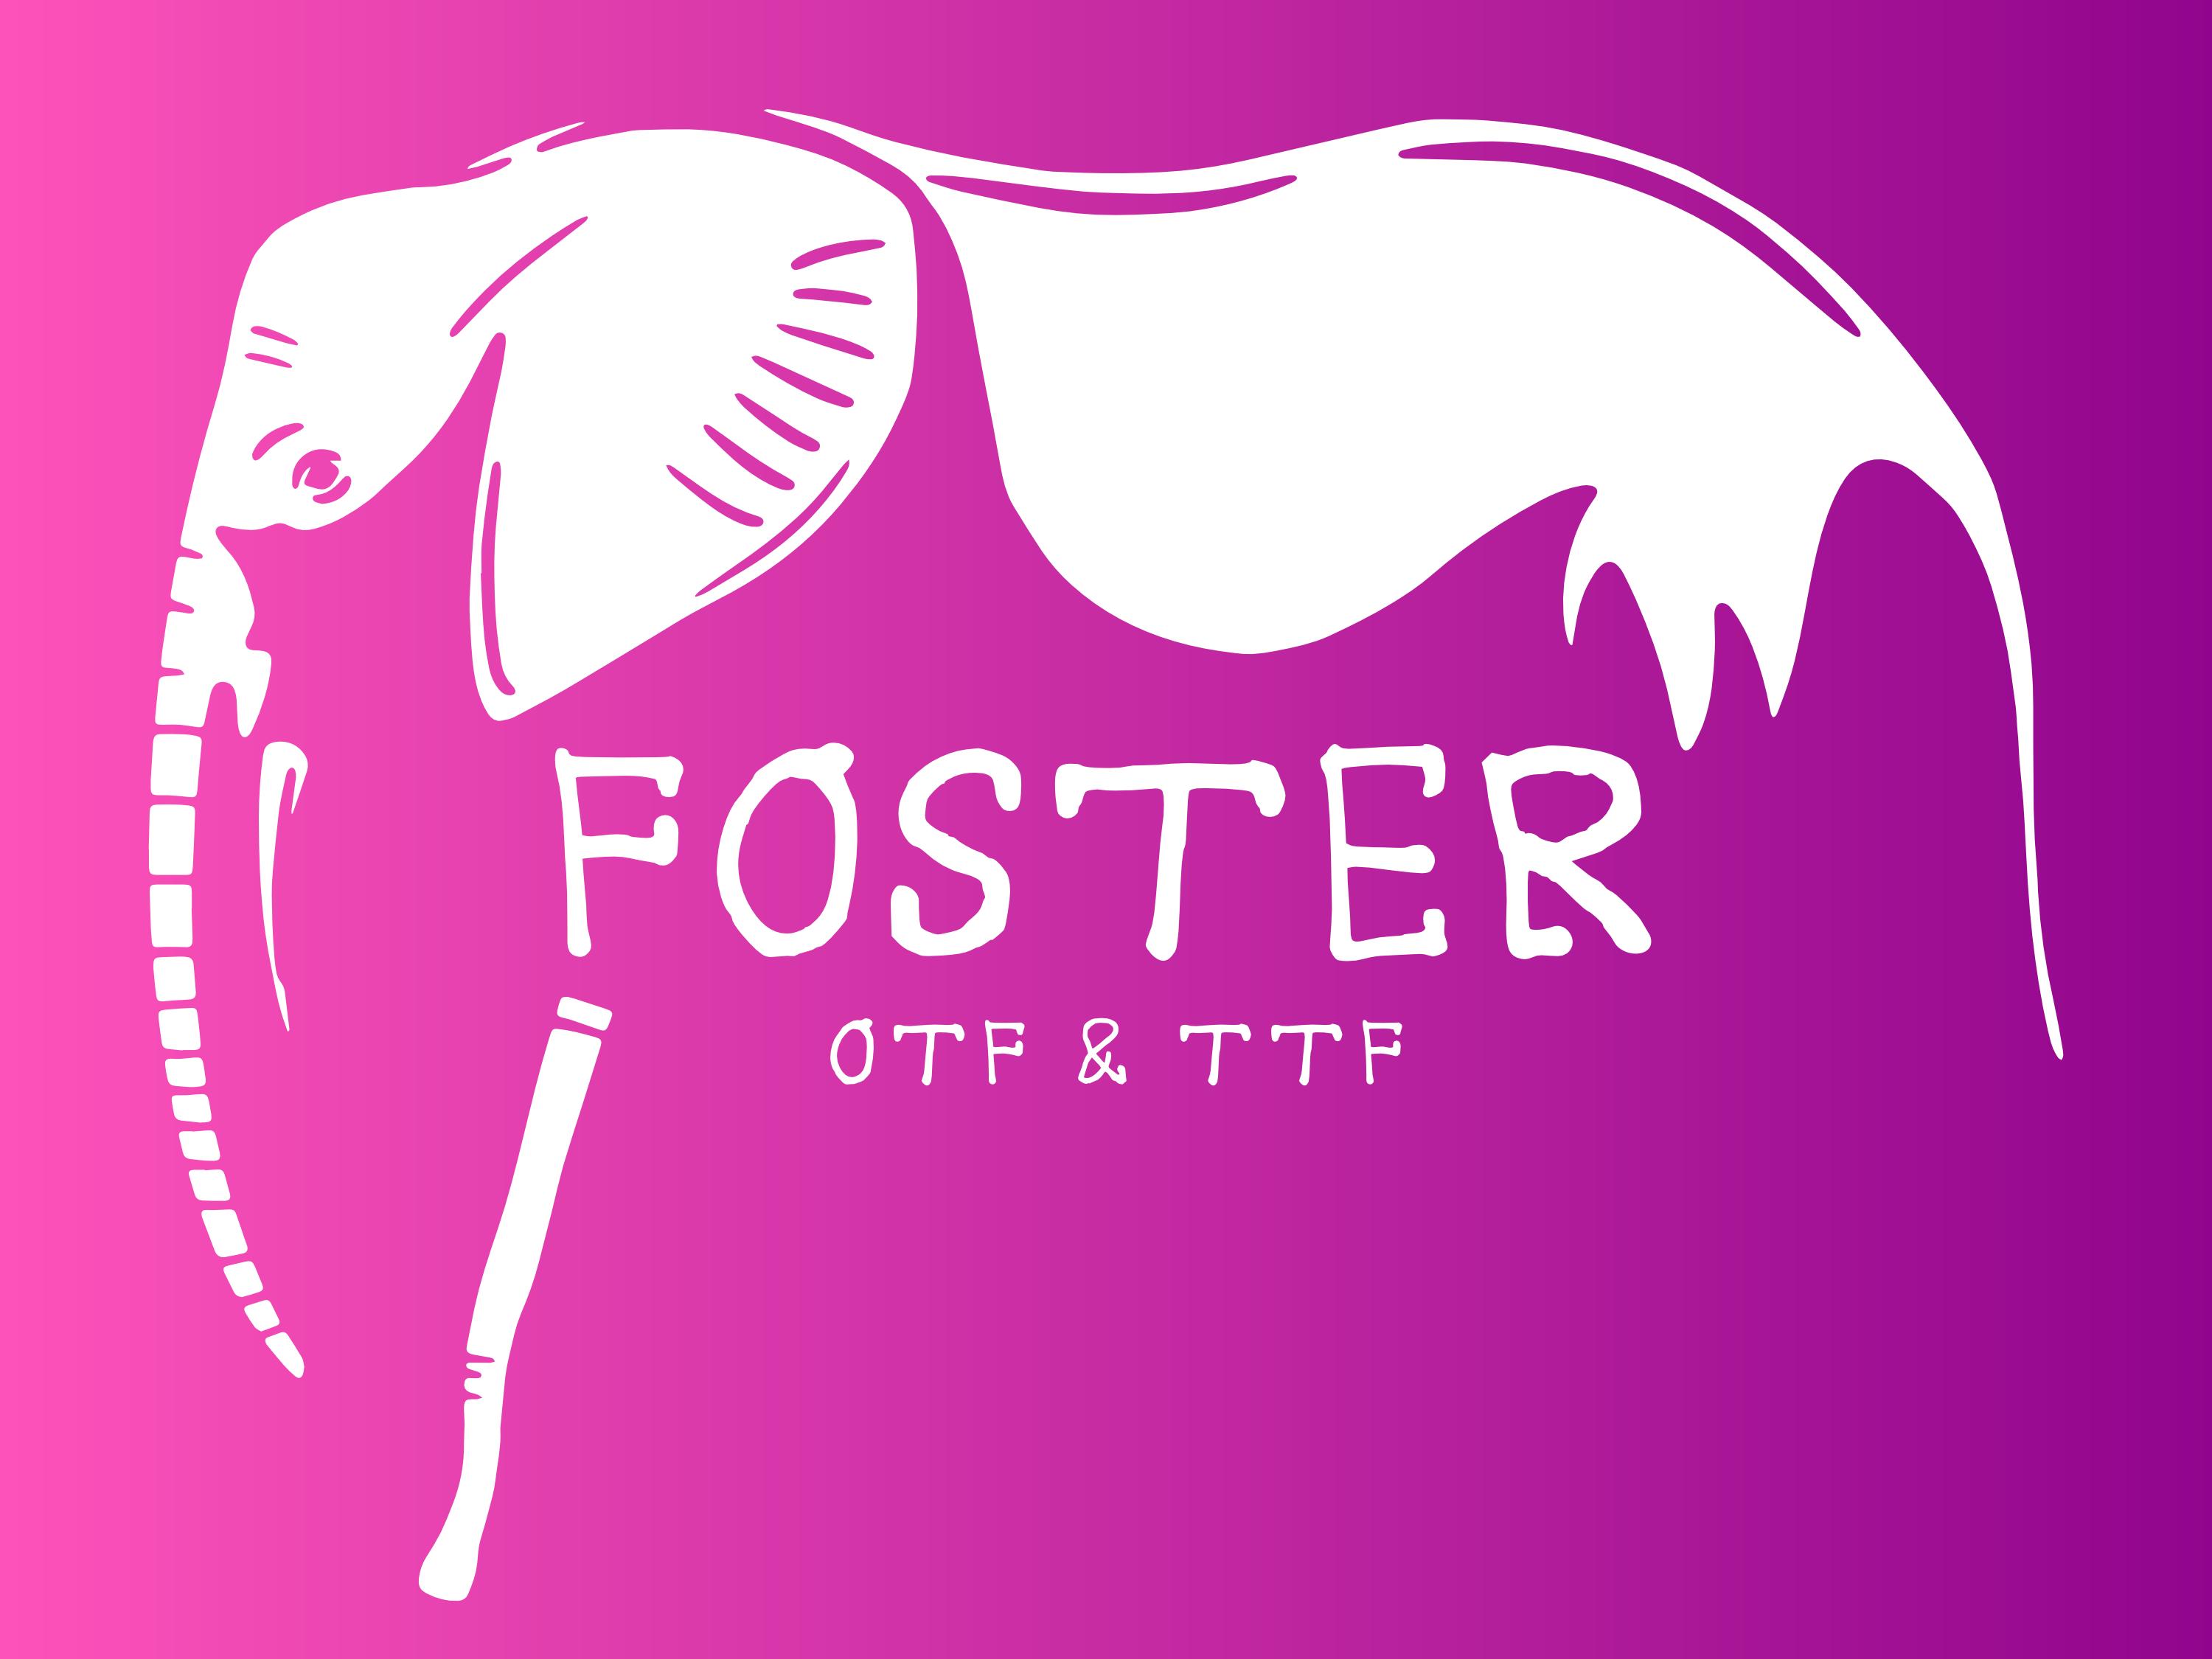 Foster Font